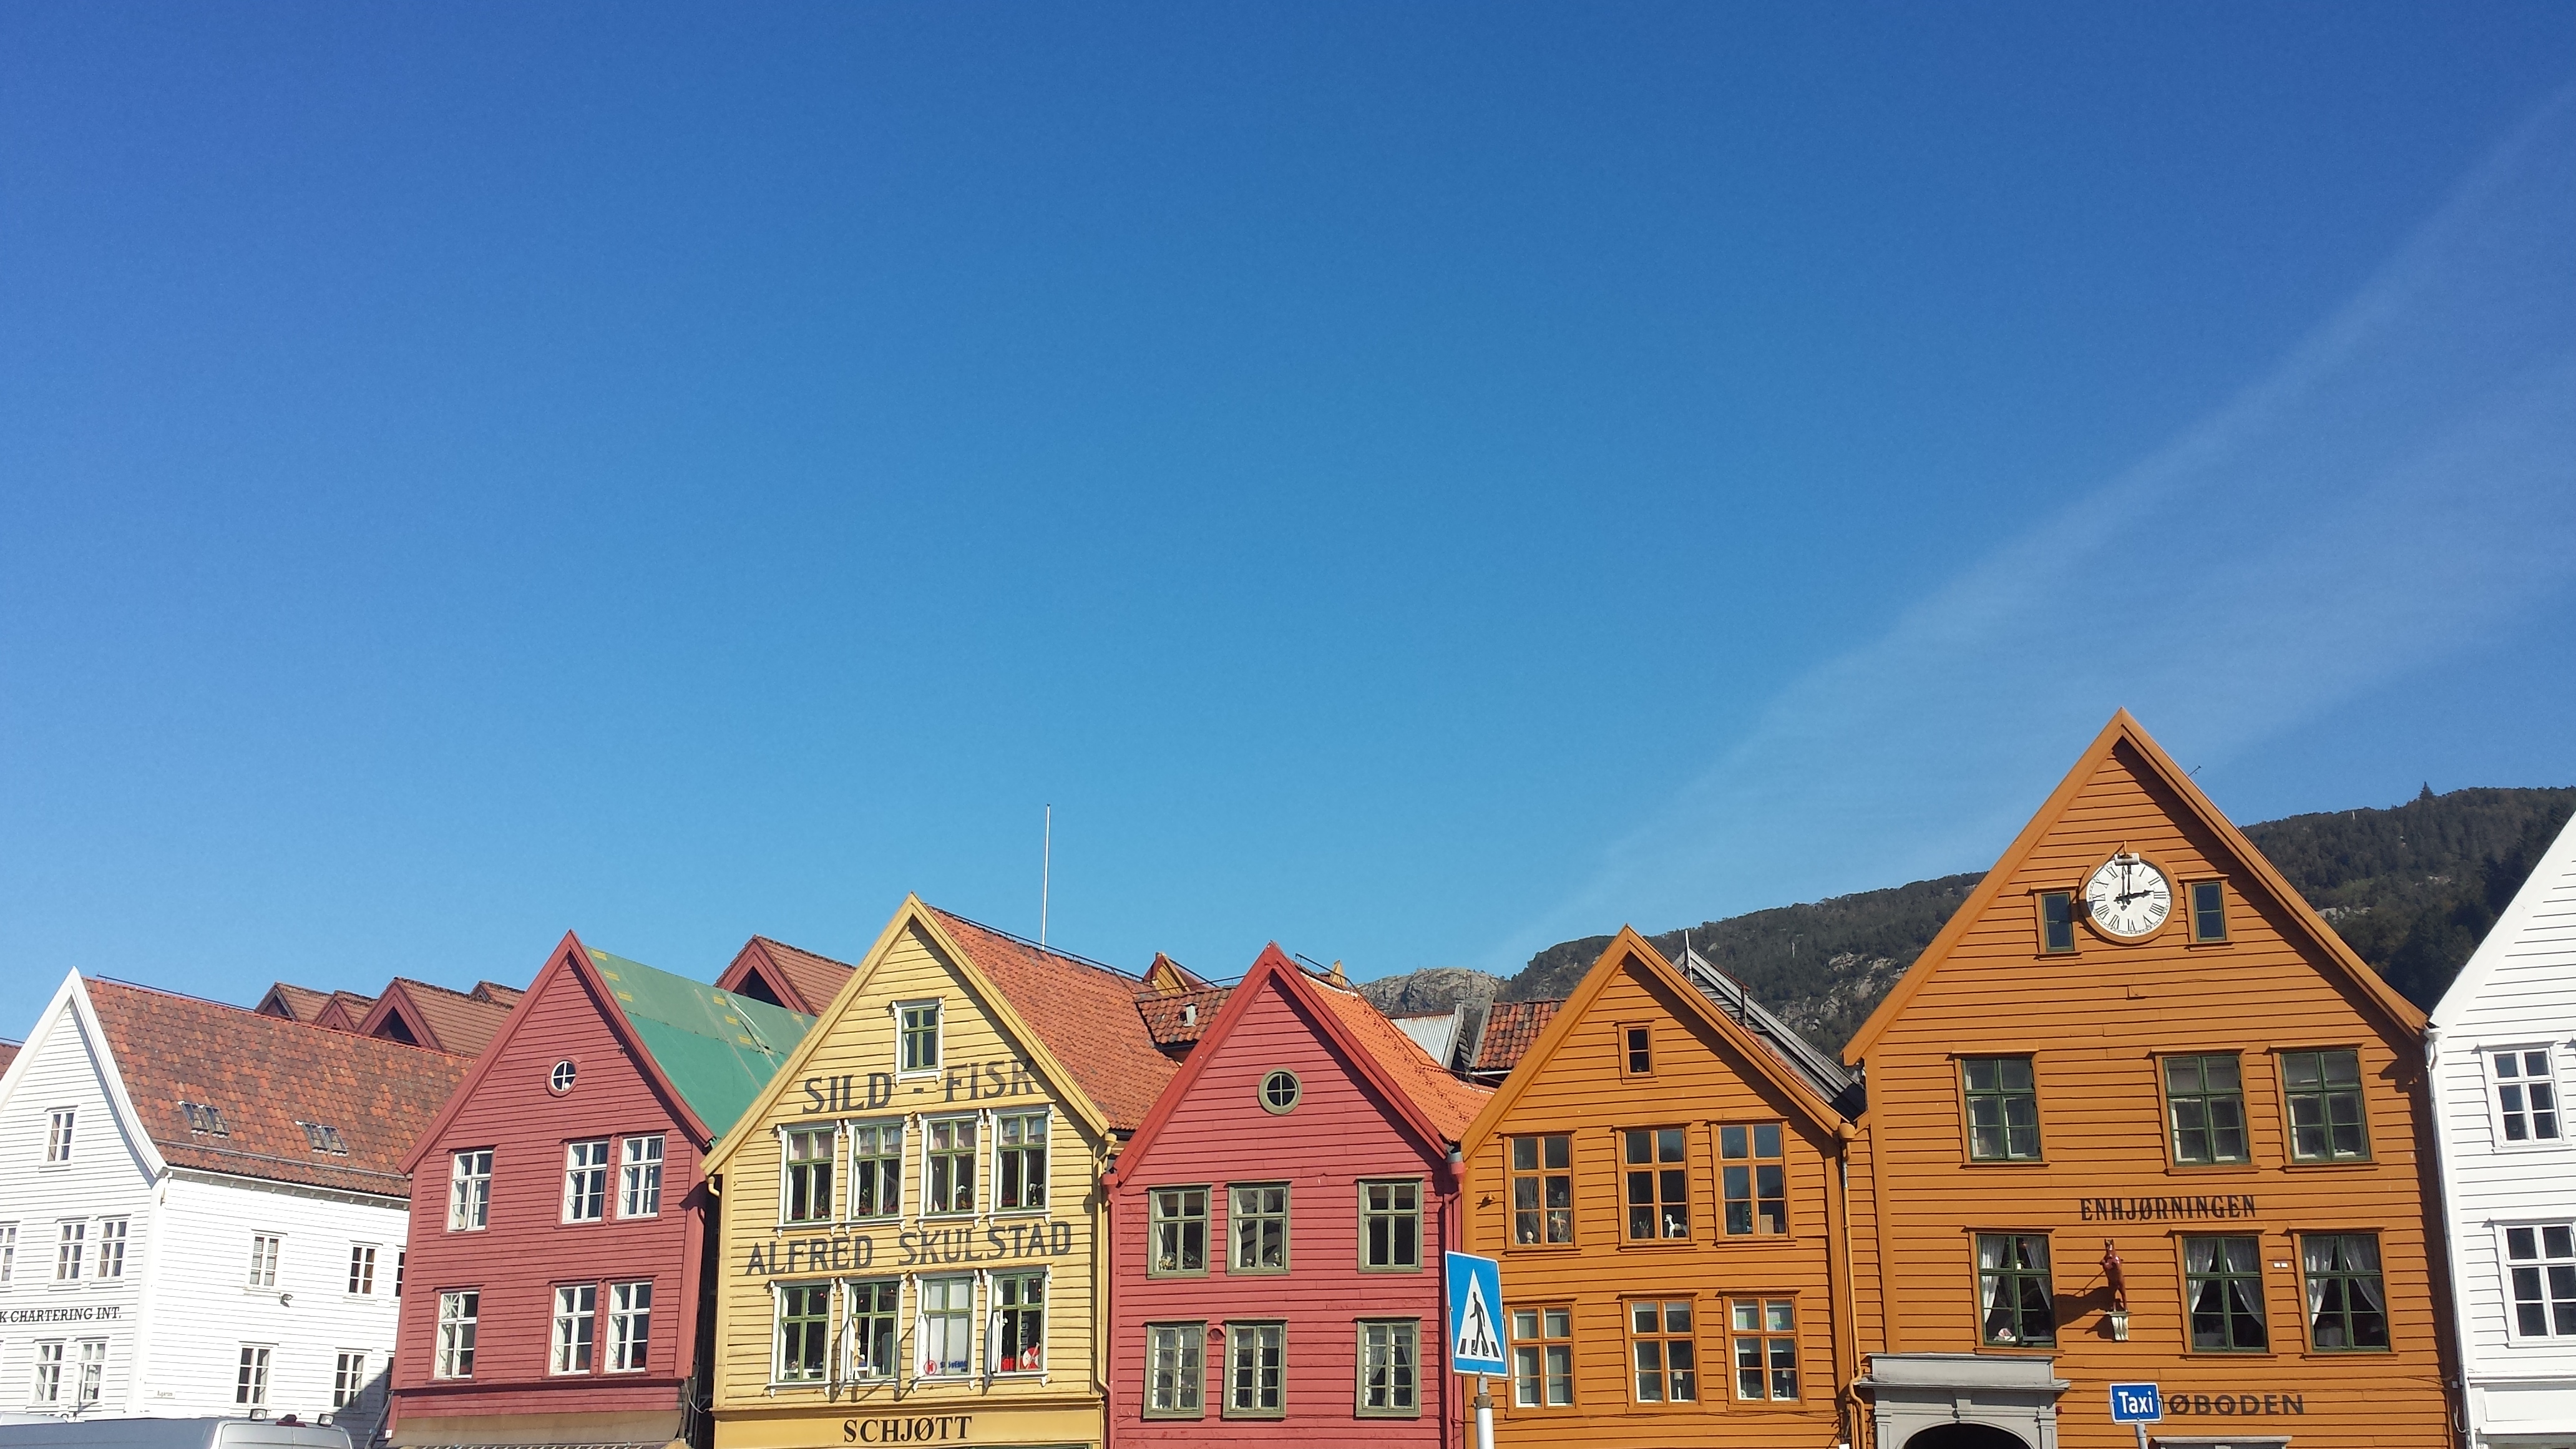 Exploring the tiny streets of Bergen, Norway